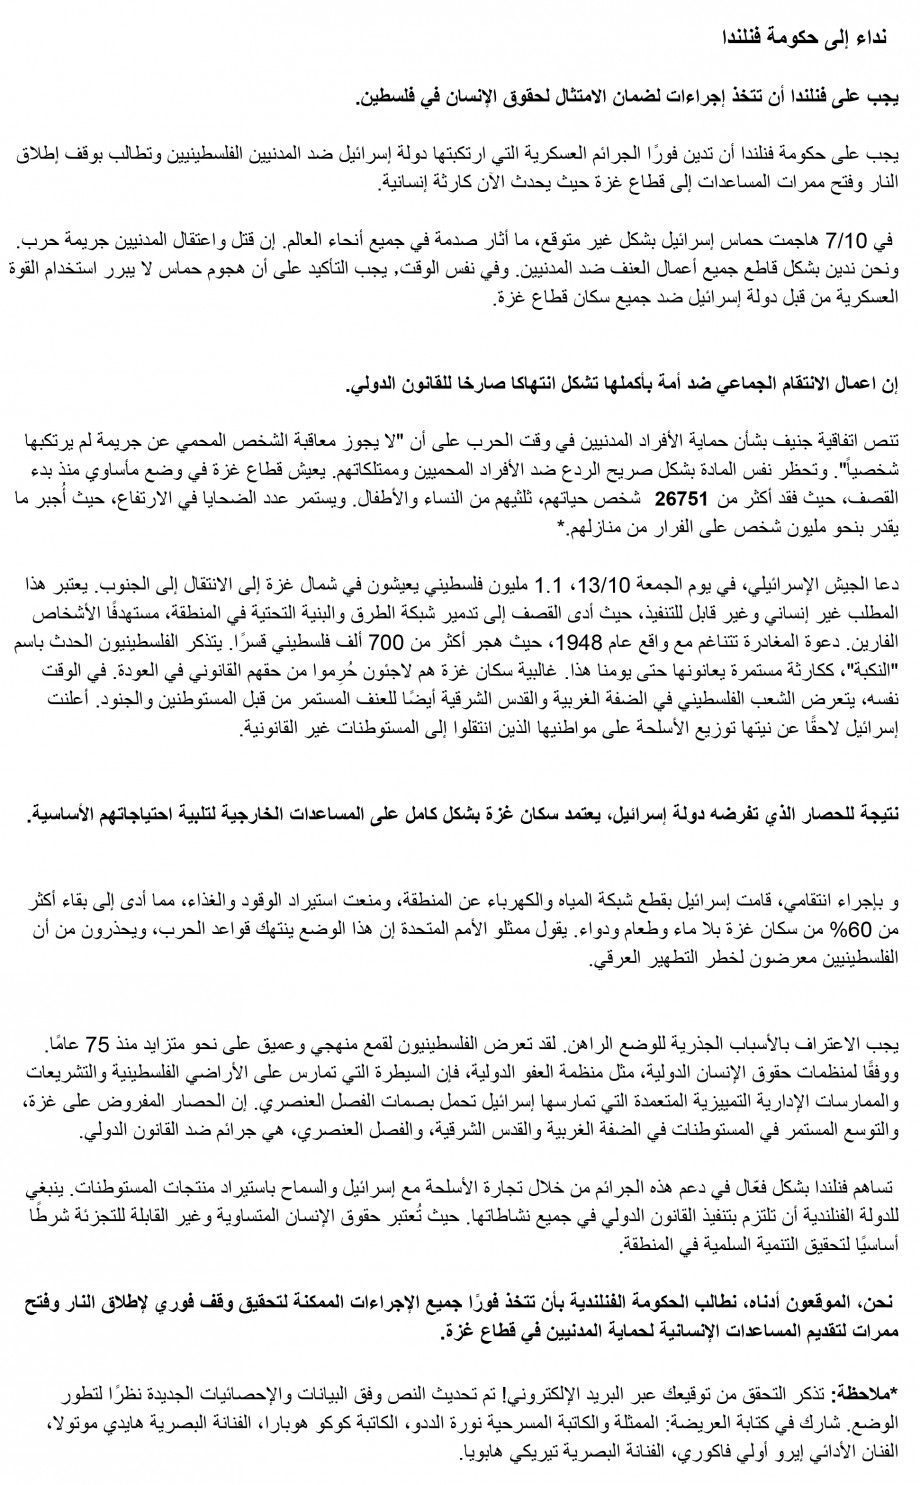 Petition_Arabic_translation-1-11.jpg